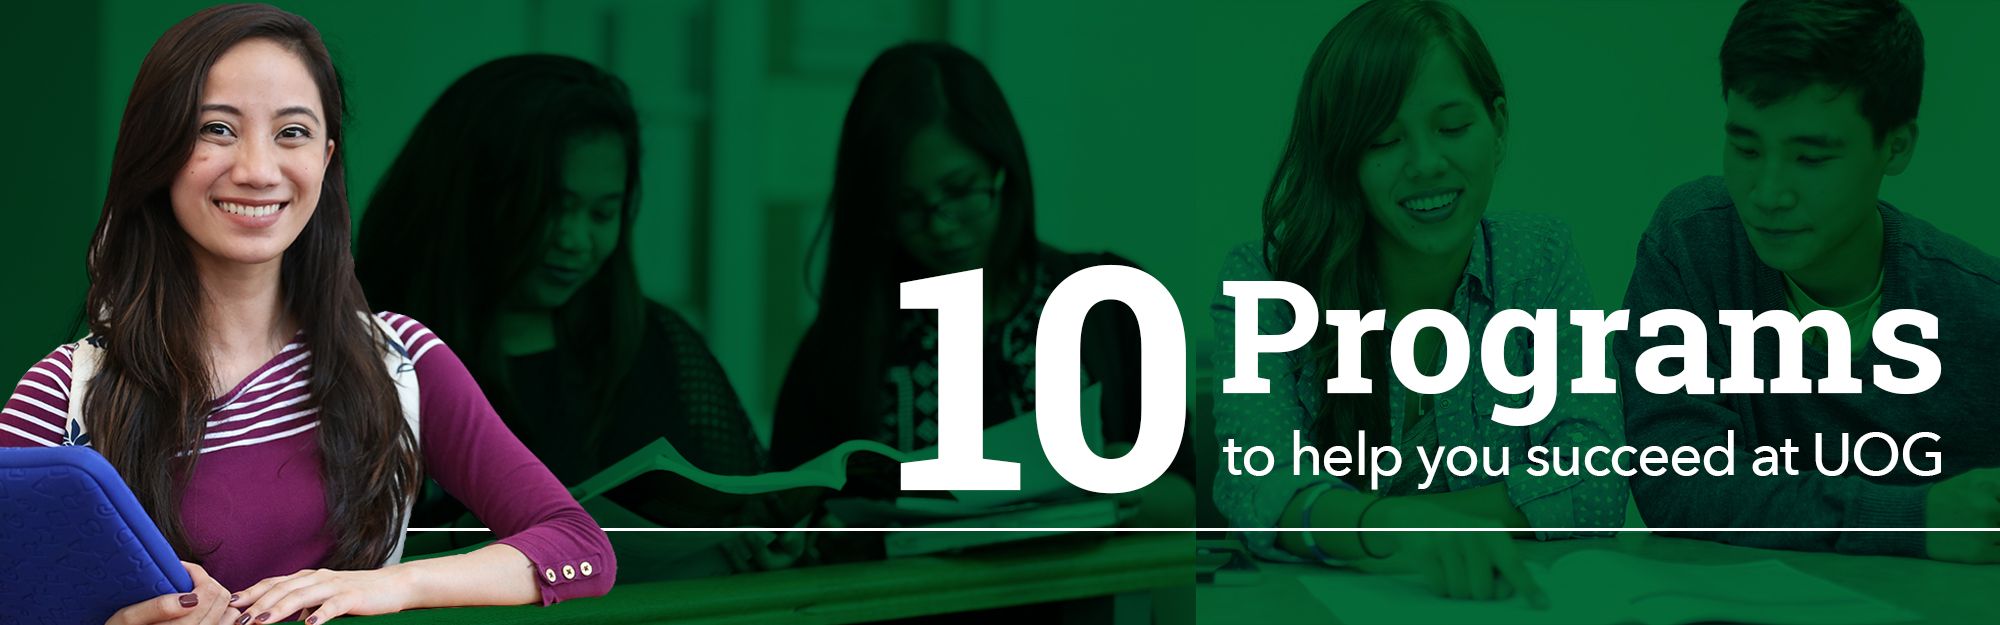 10 programs to help succeed at UOG